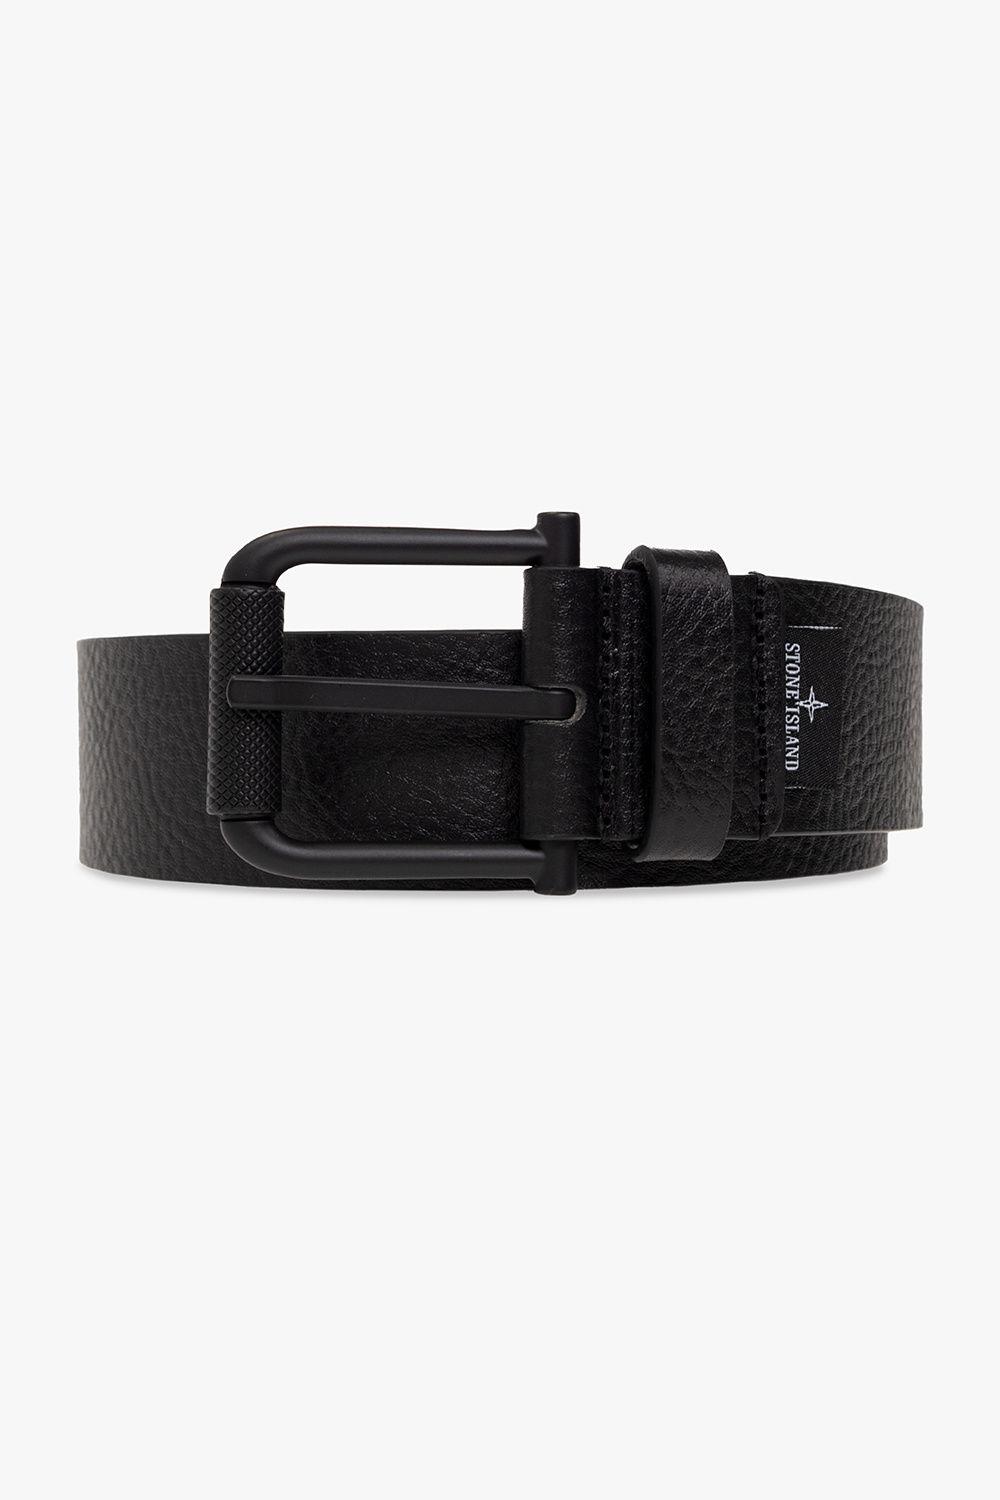 Stone Island Leather Belt in Black | Lyst